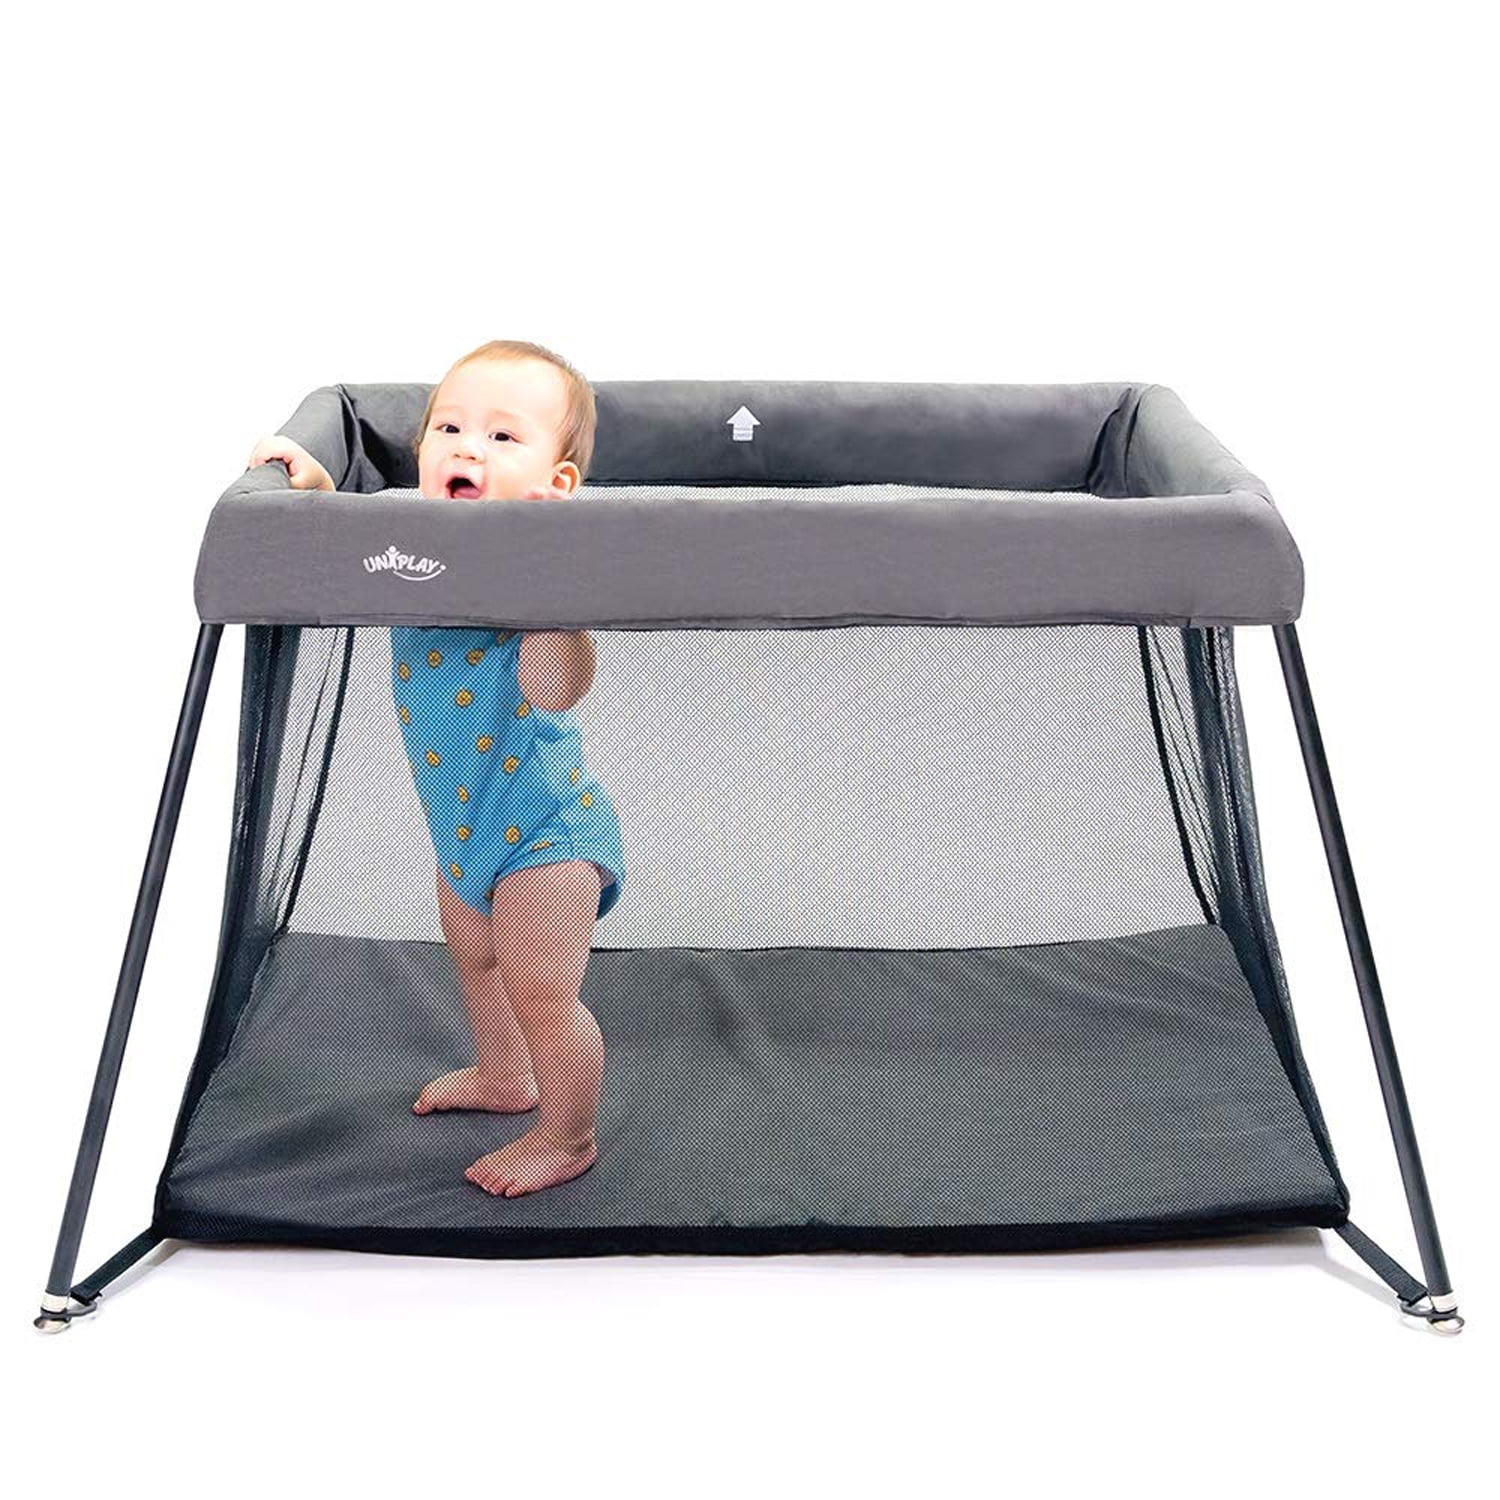 JOYMOR 2 in 1 Portable Baby Playpen Foldable Travel Crib with 